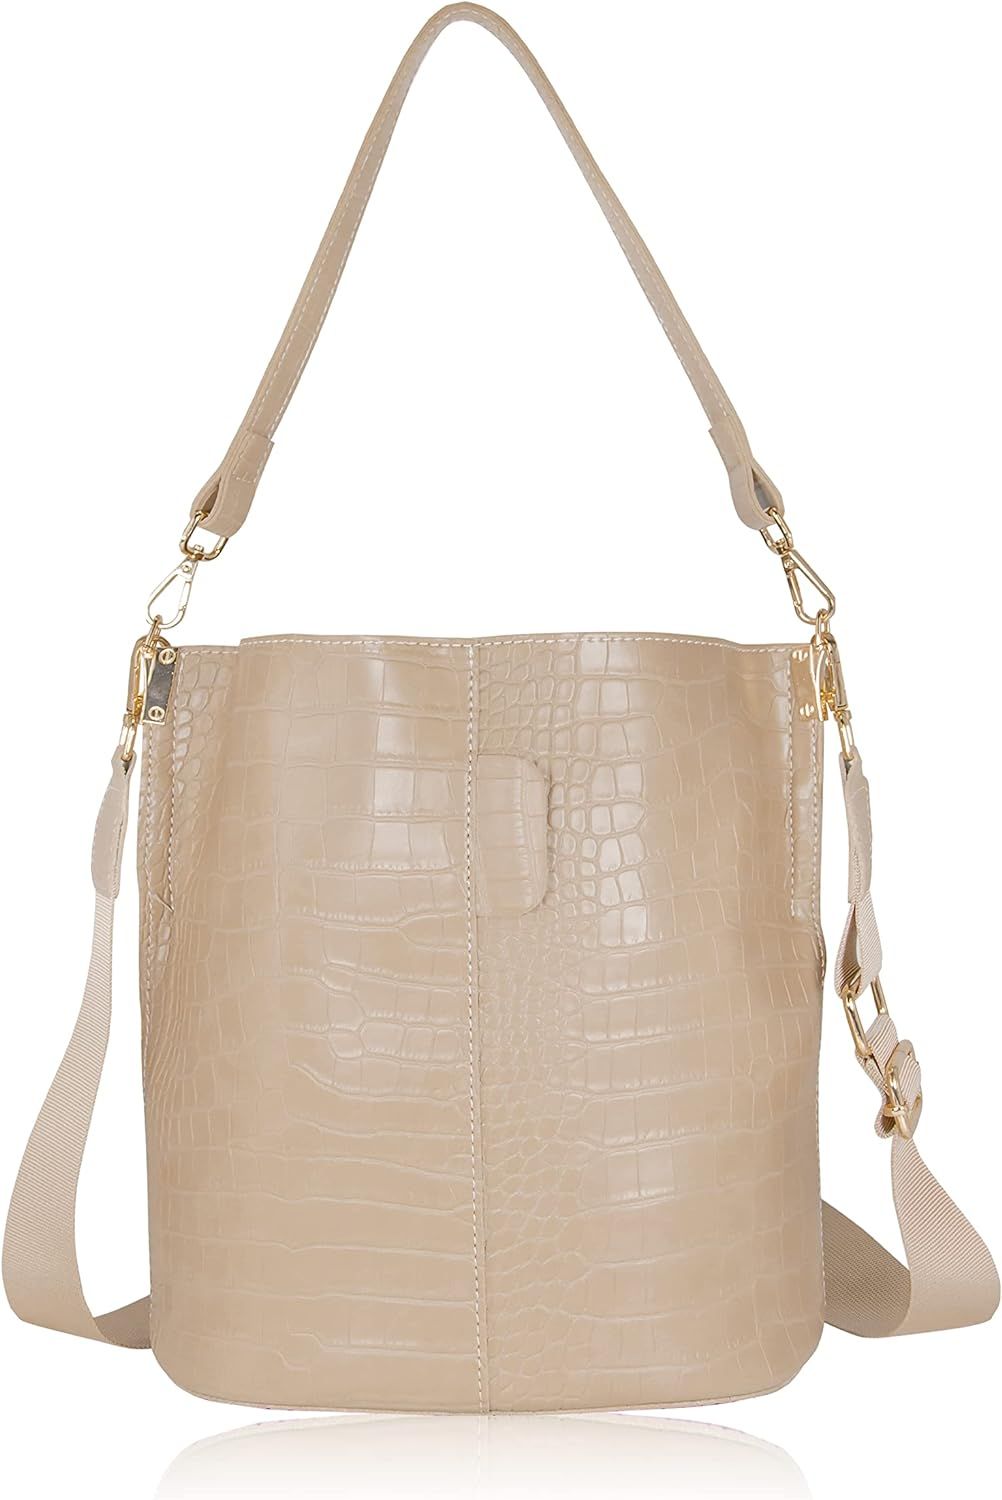 Women's Bucket Bag and Purses Crocodile Leather Crossbody Shoulder Handbags with 2 Straps Large C... | Amazon (US)